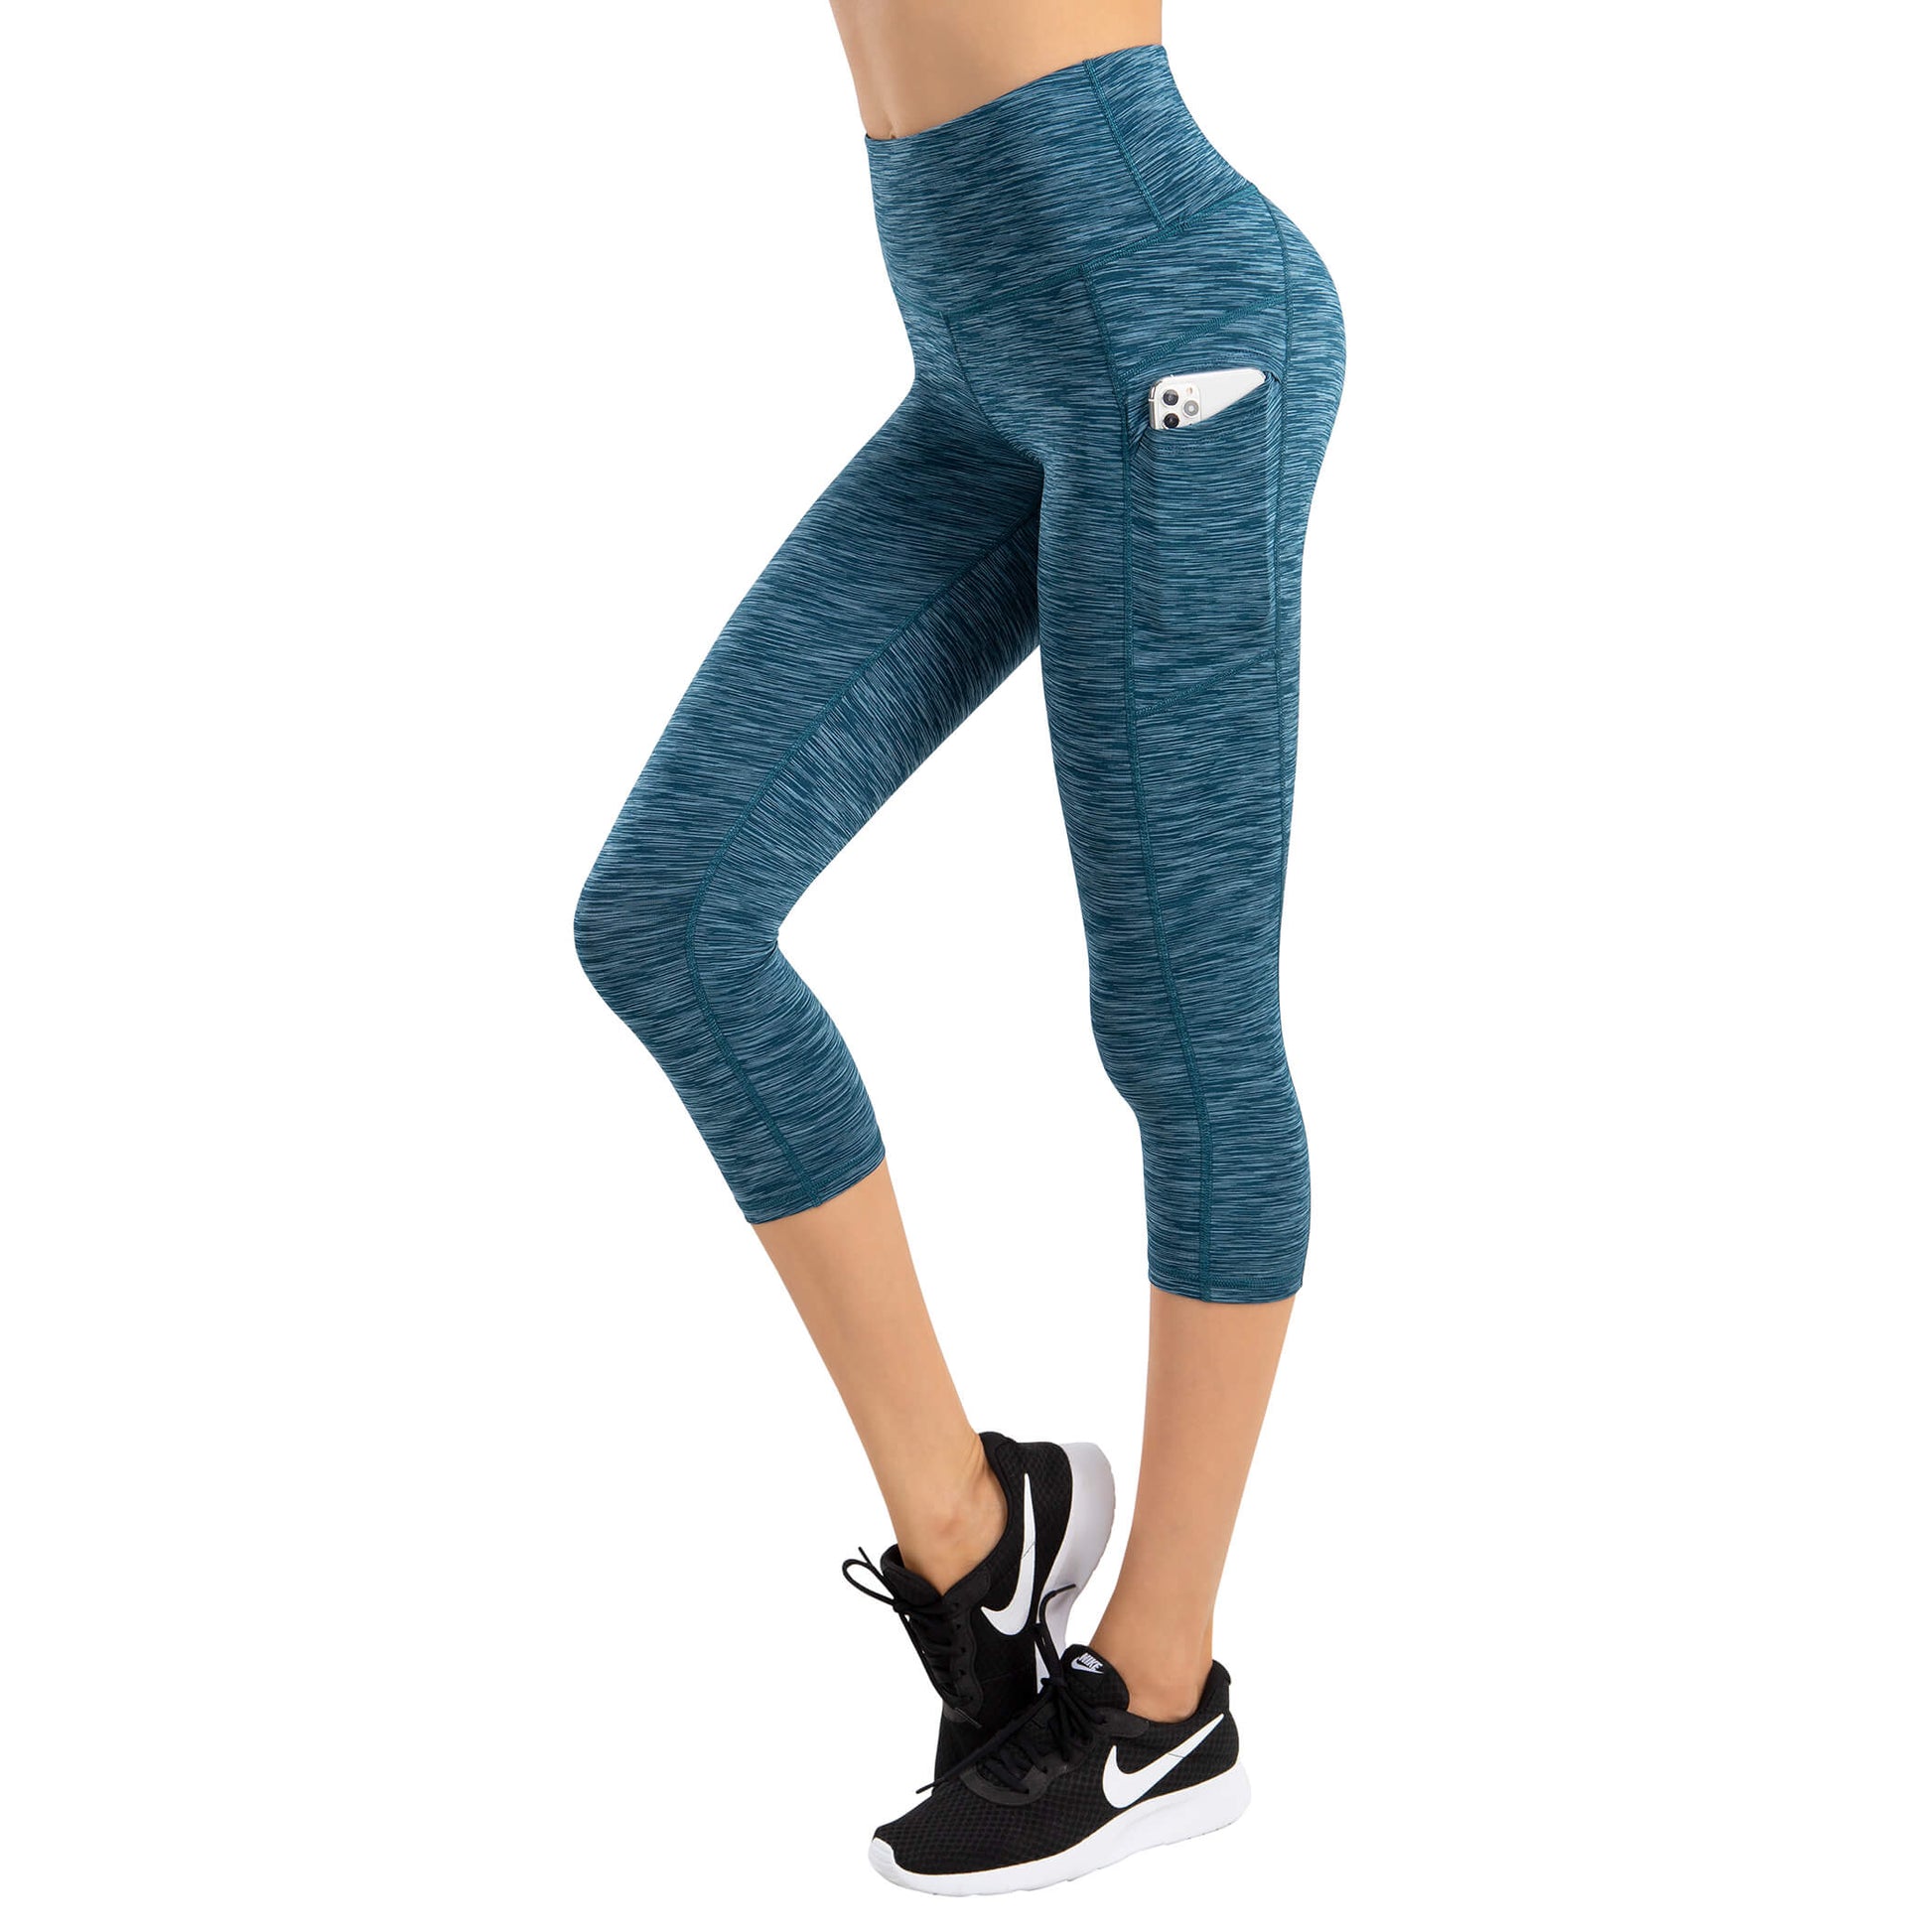 LifeSky High Waist Yoga Pants Workout Leggings for Women with